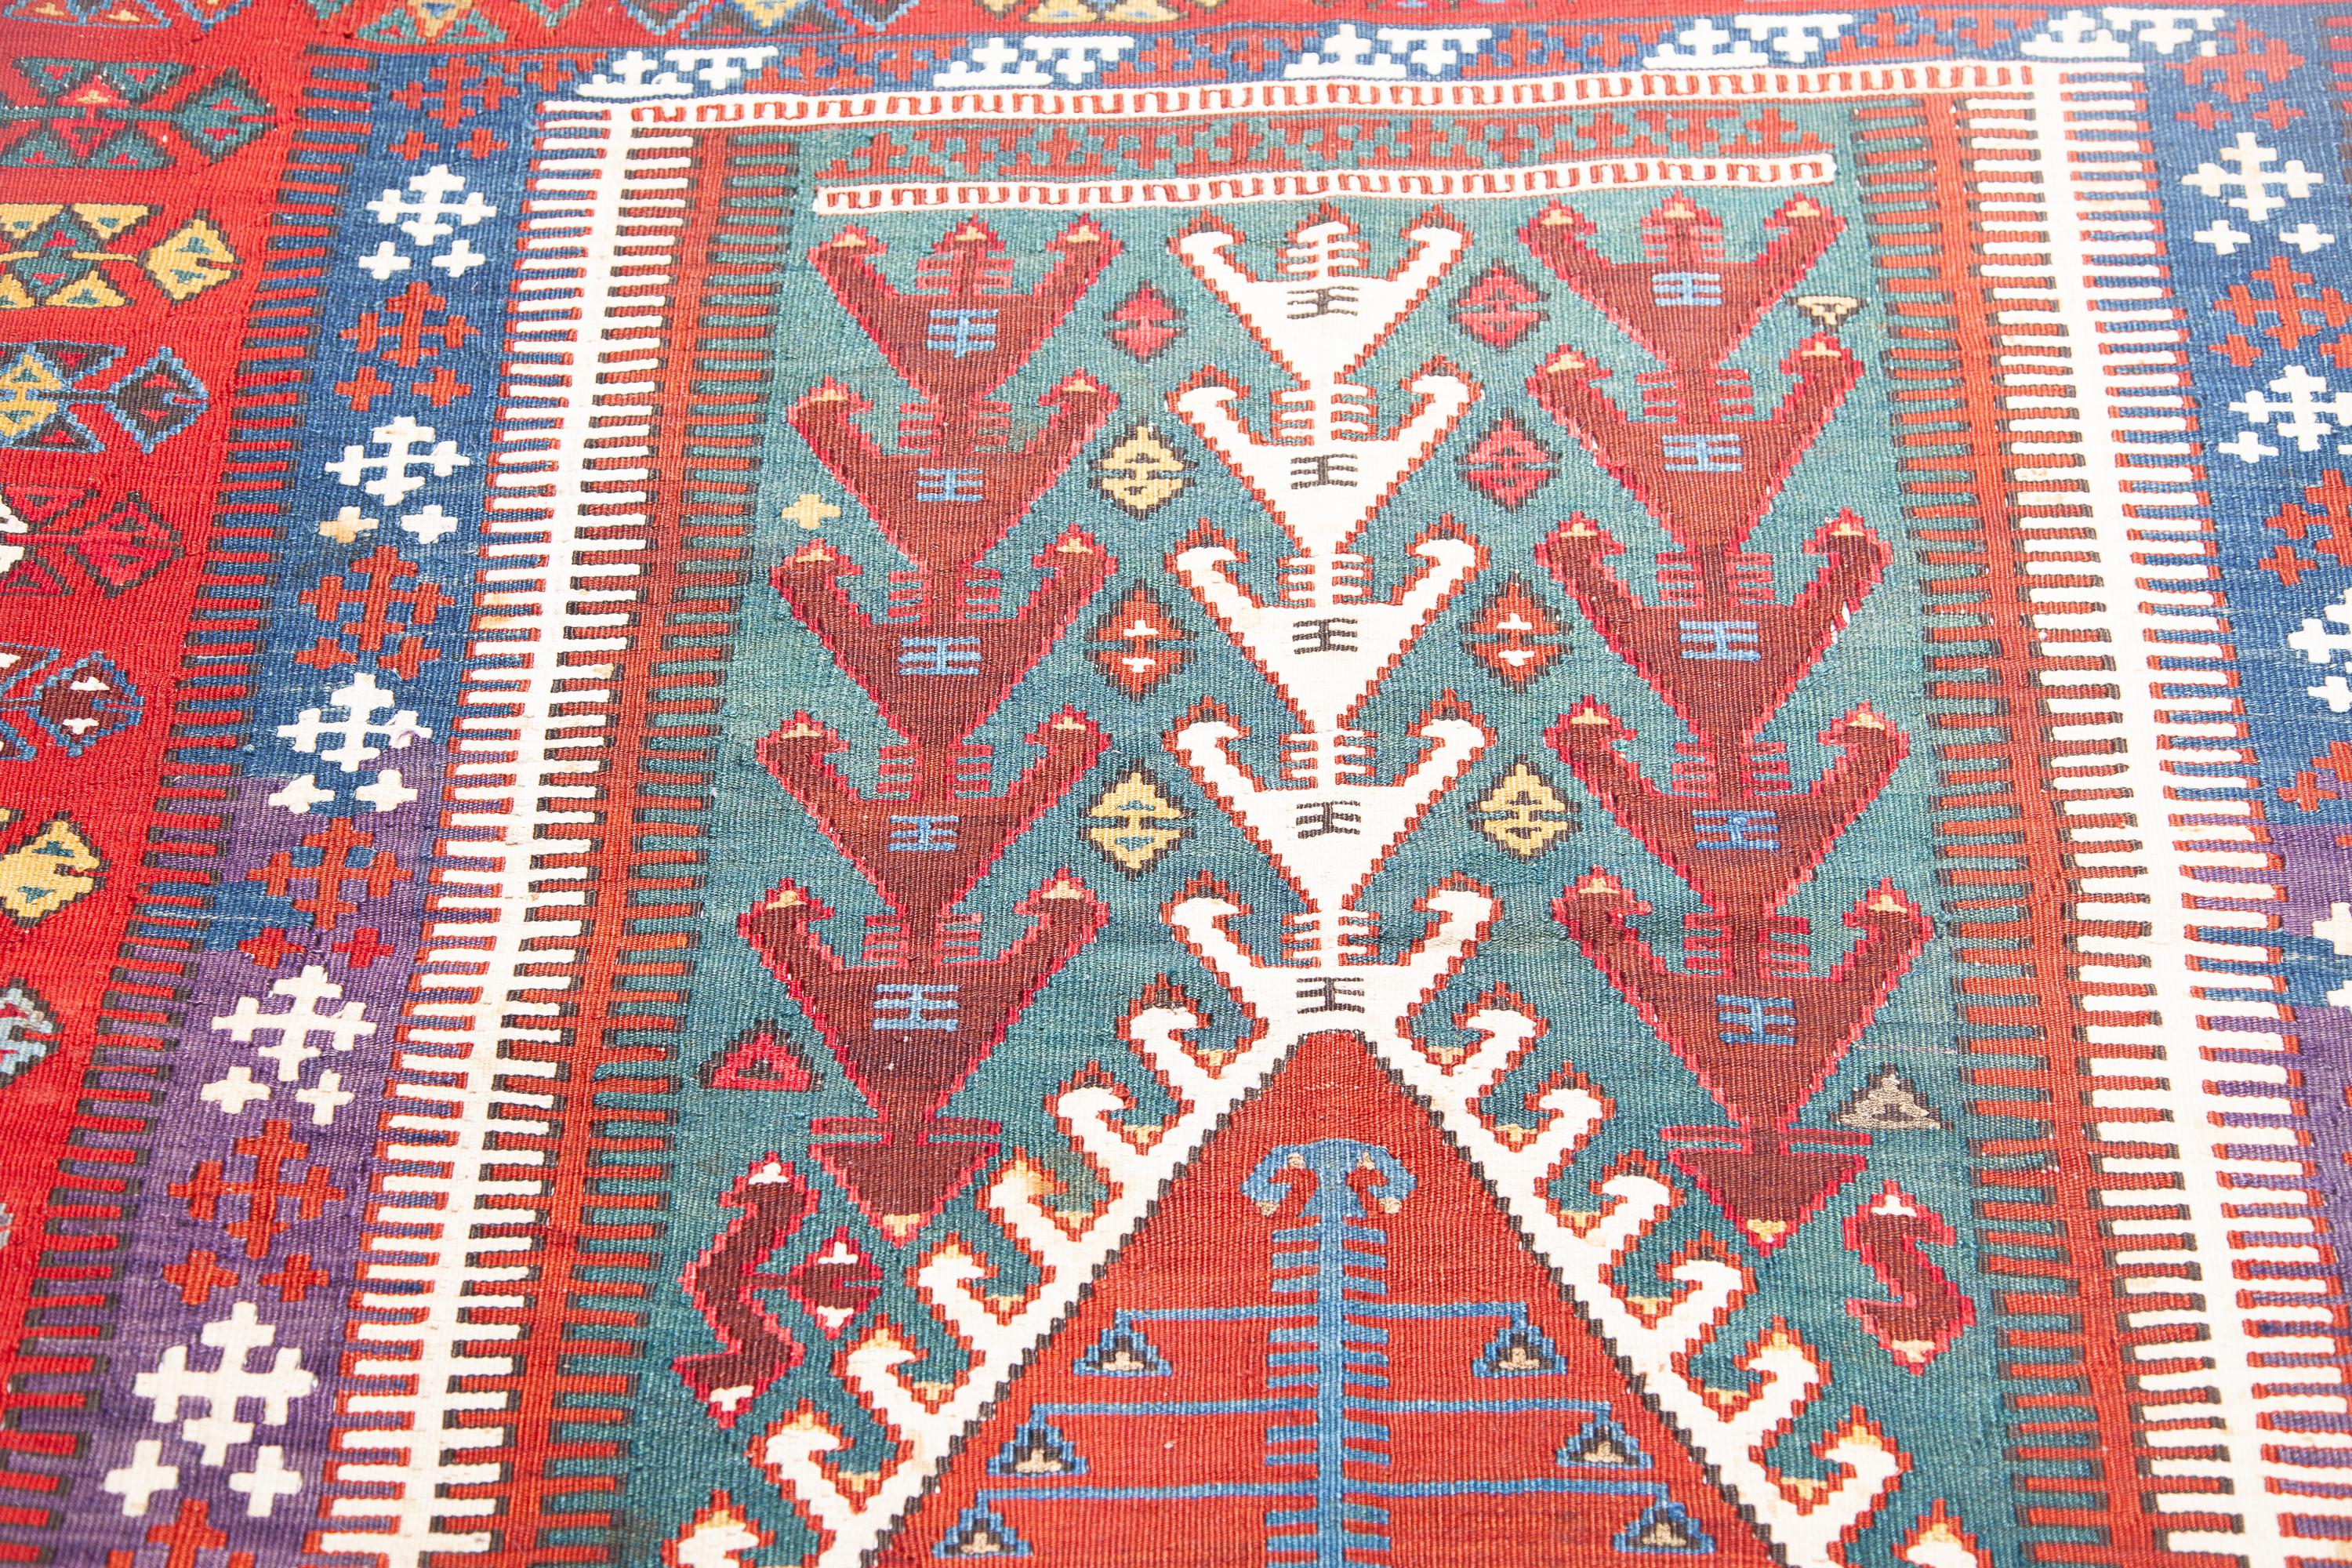 Hand-Woven Antique Konya Obruk Kilim Central Anatolian Rug Turkish Carpet Metallic Threads For Sale